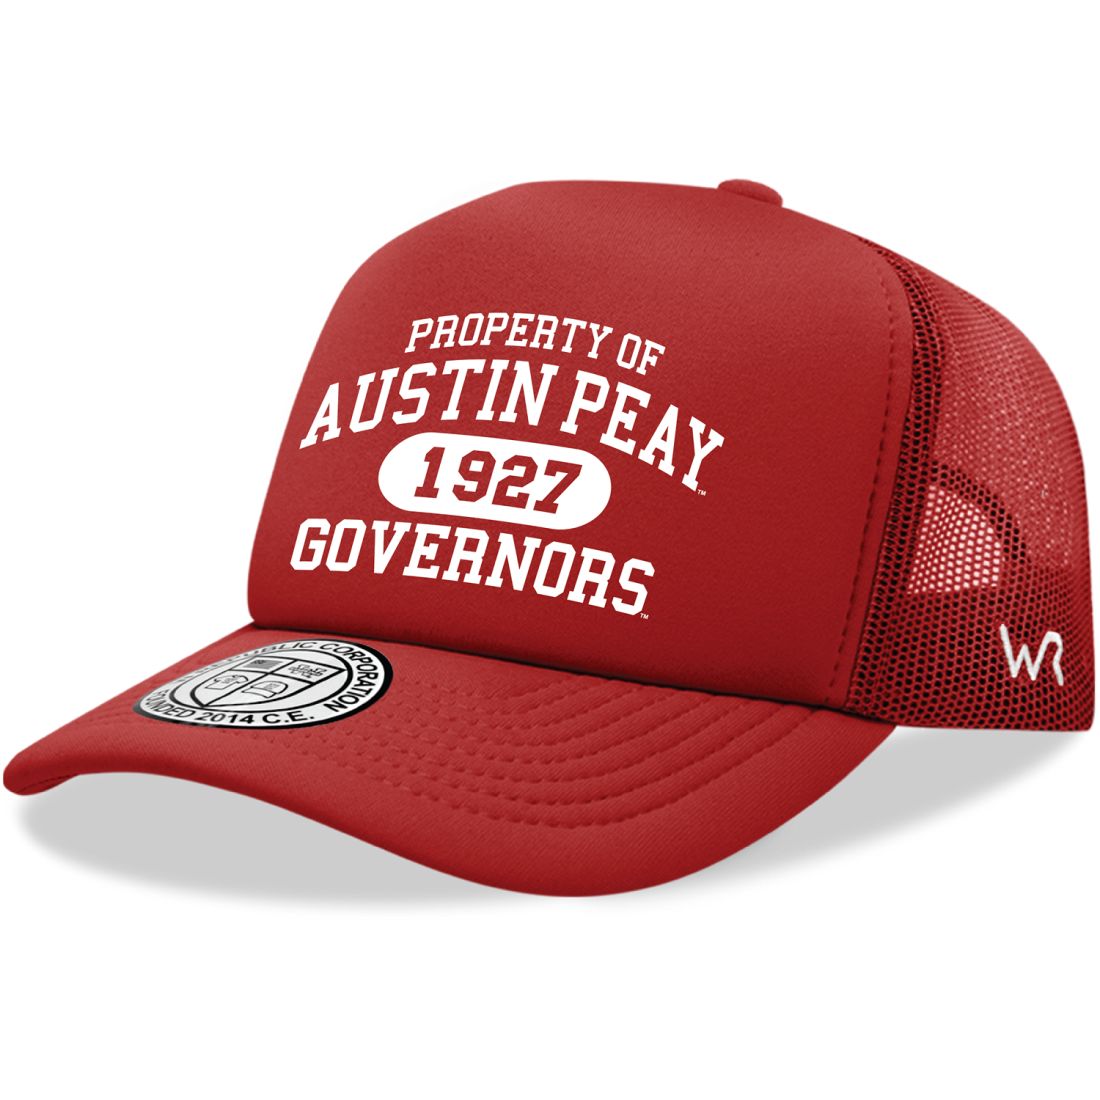 APSU Austin Peay State University Governors Property Foam Trucker Hats